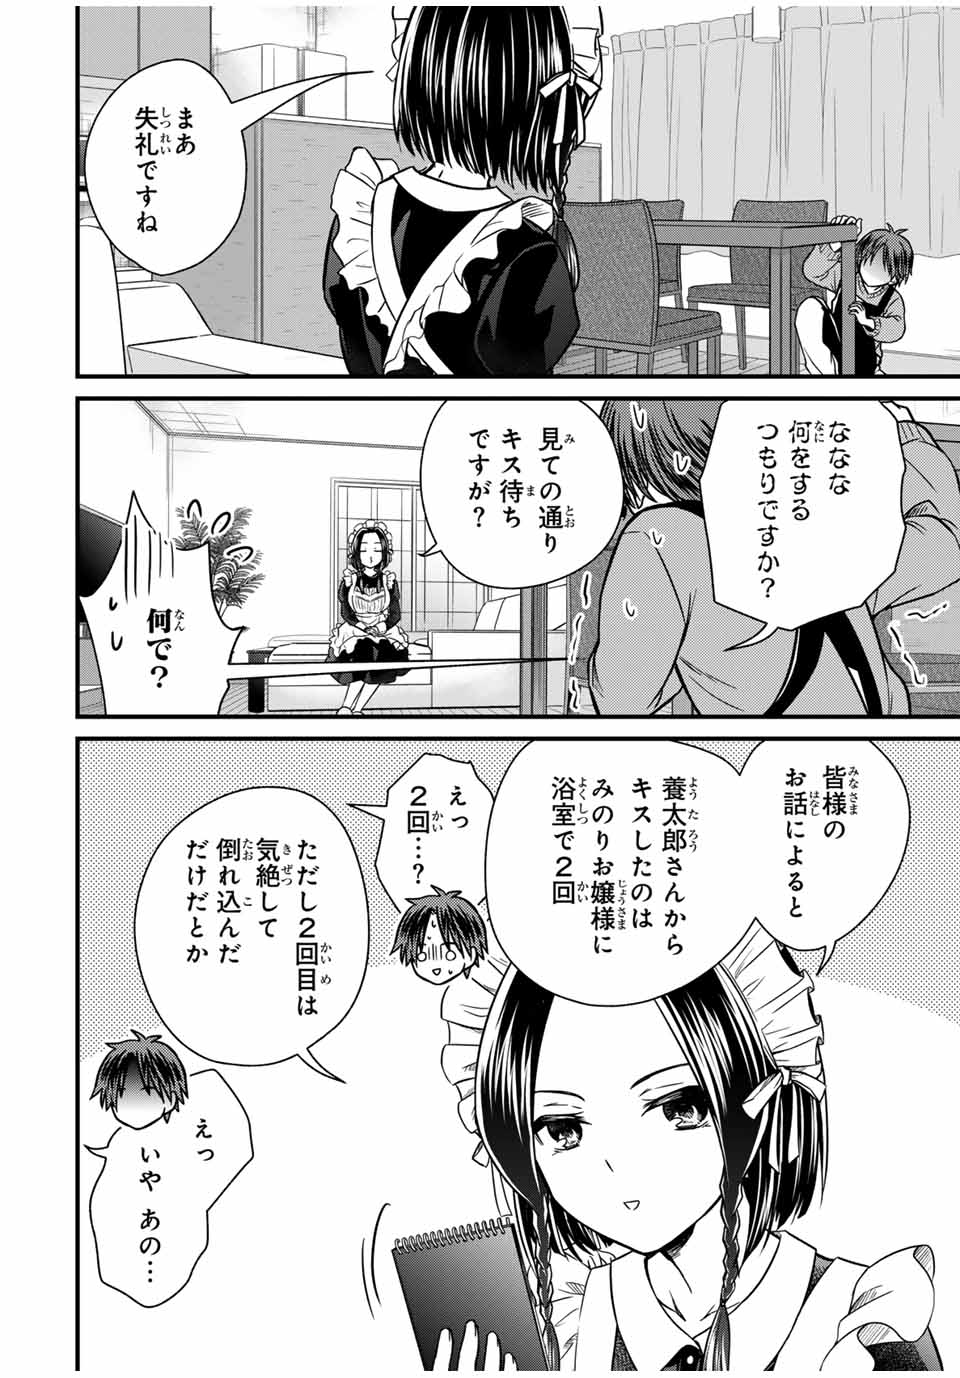 Ojousama no Shimobe - Chapter 129 - Page 8